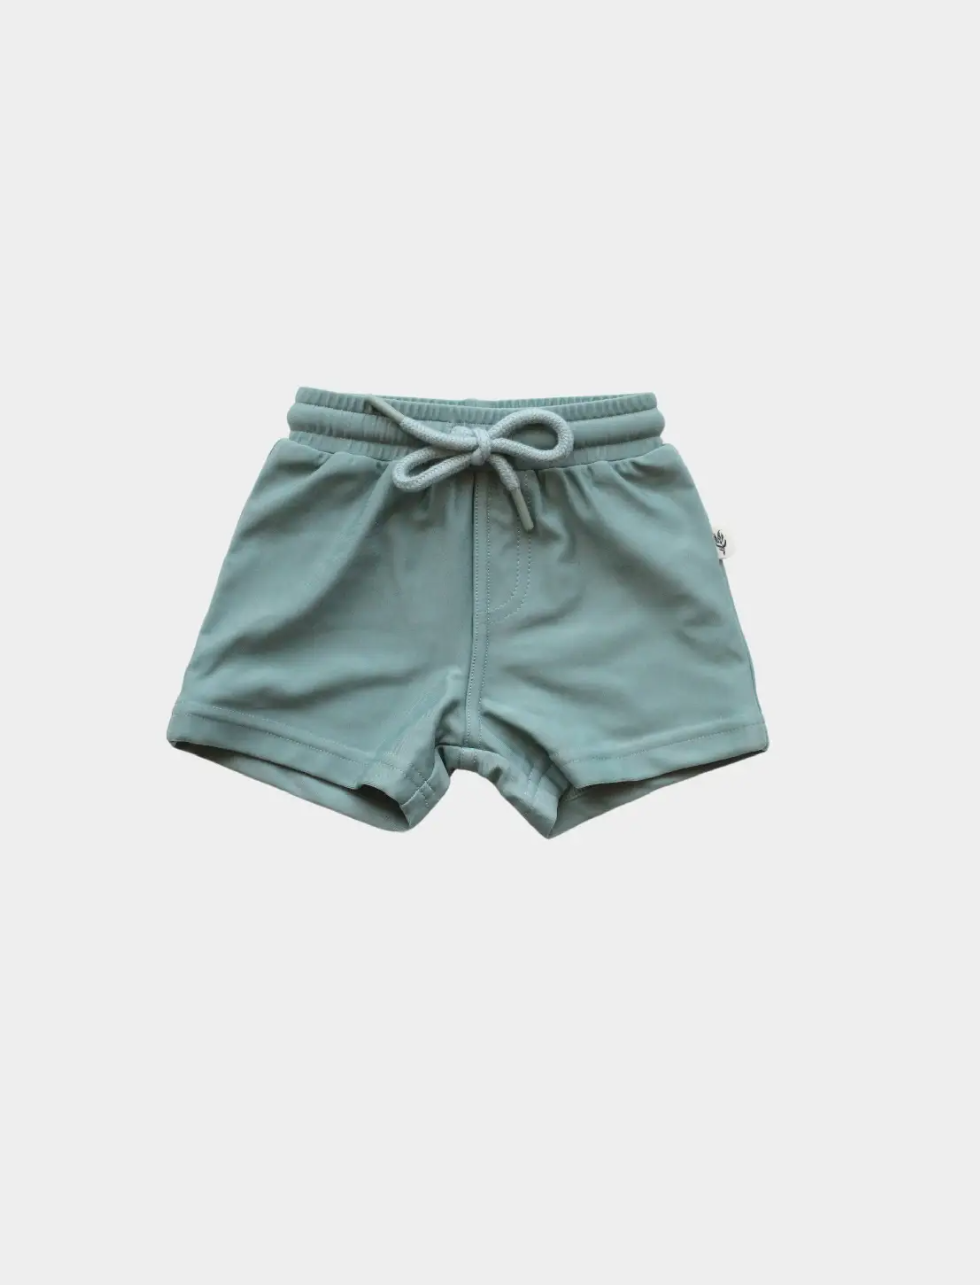 Teal Green Swim Shorts